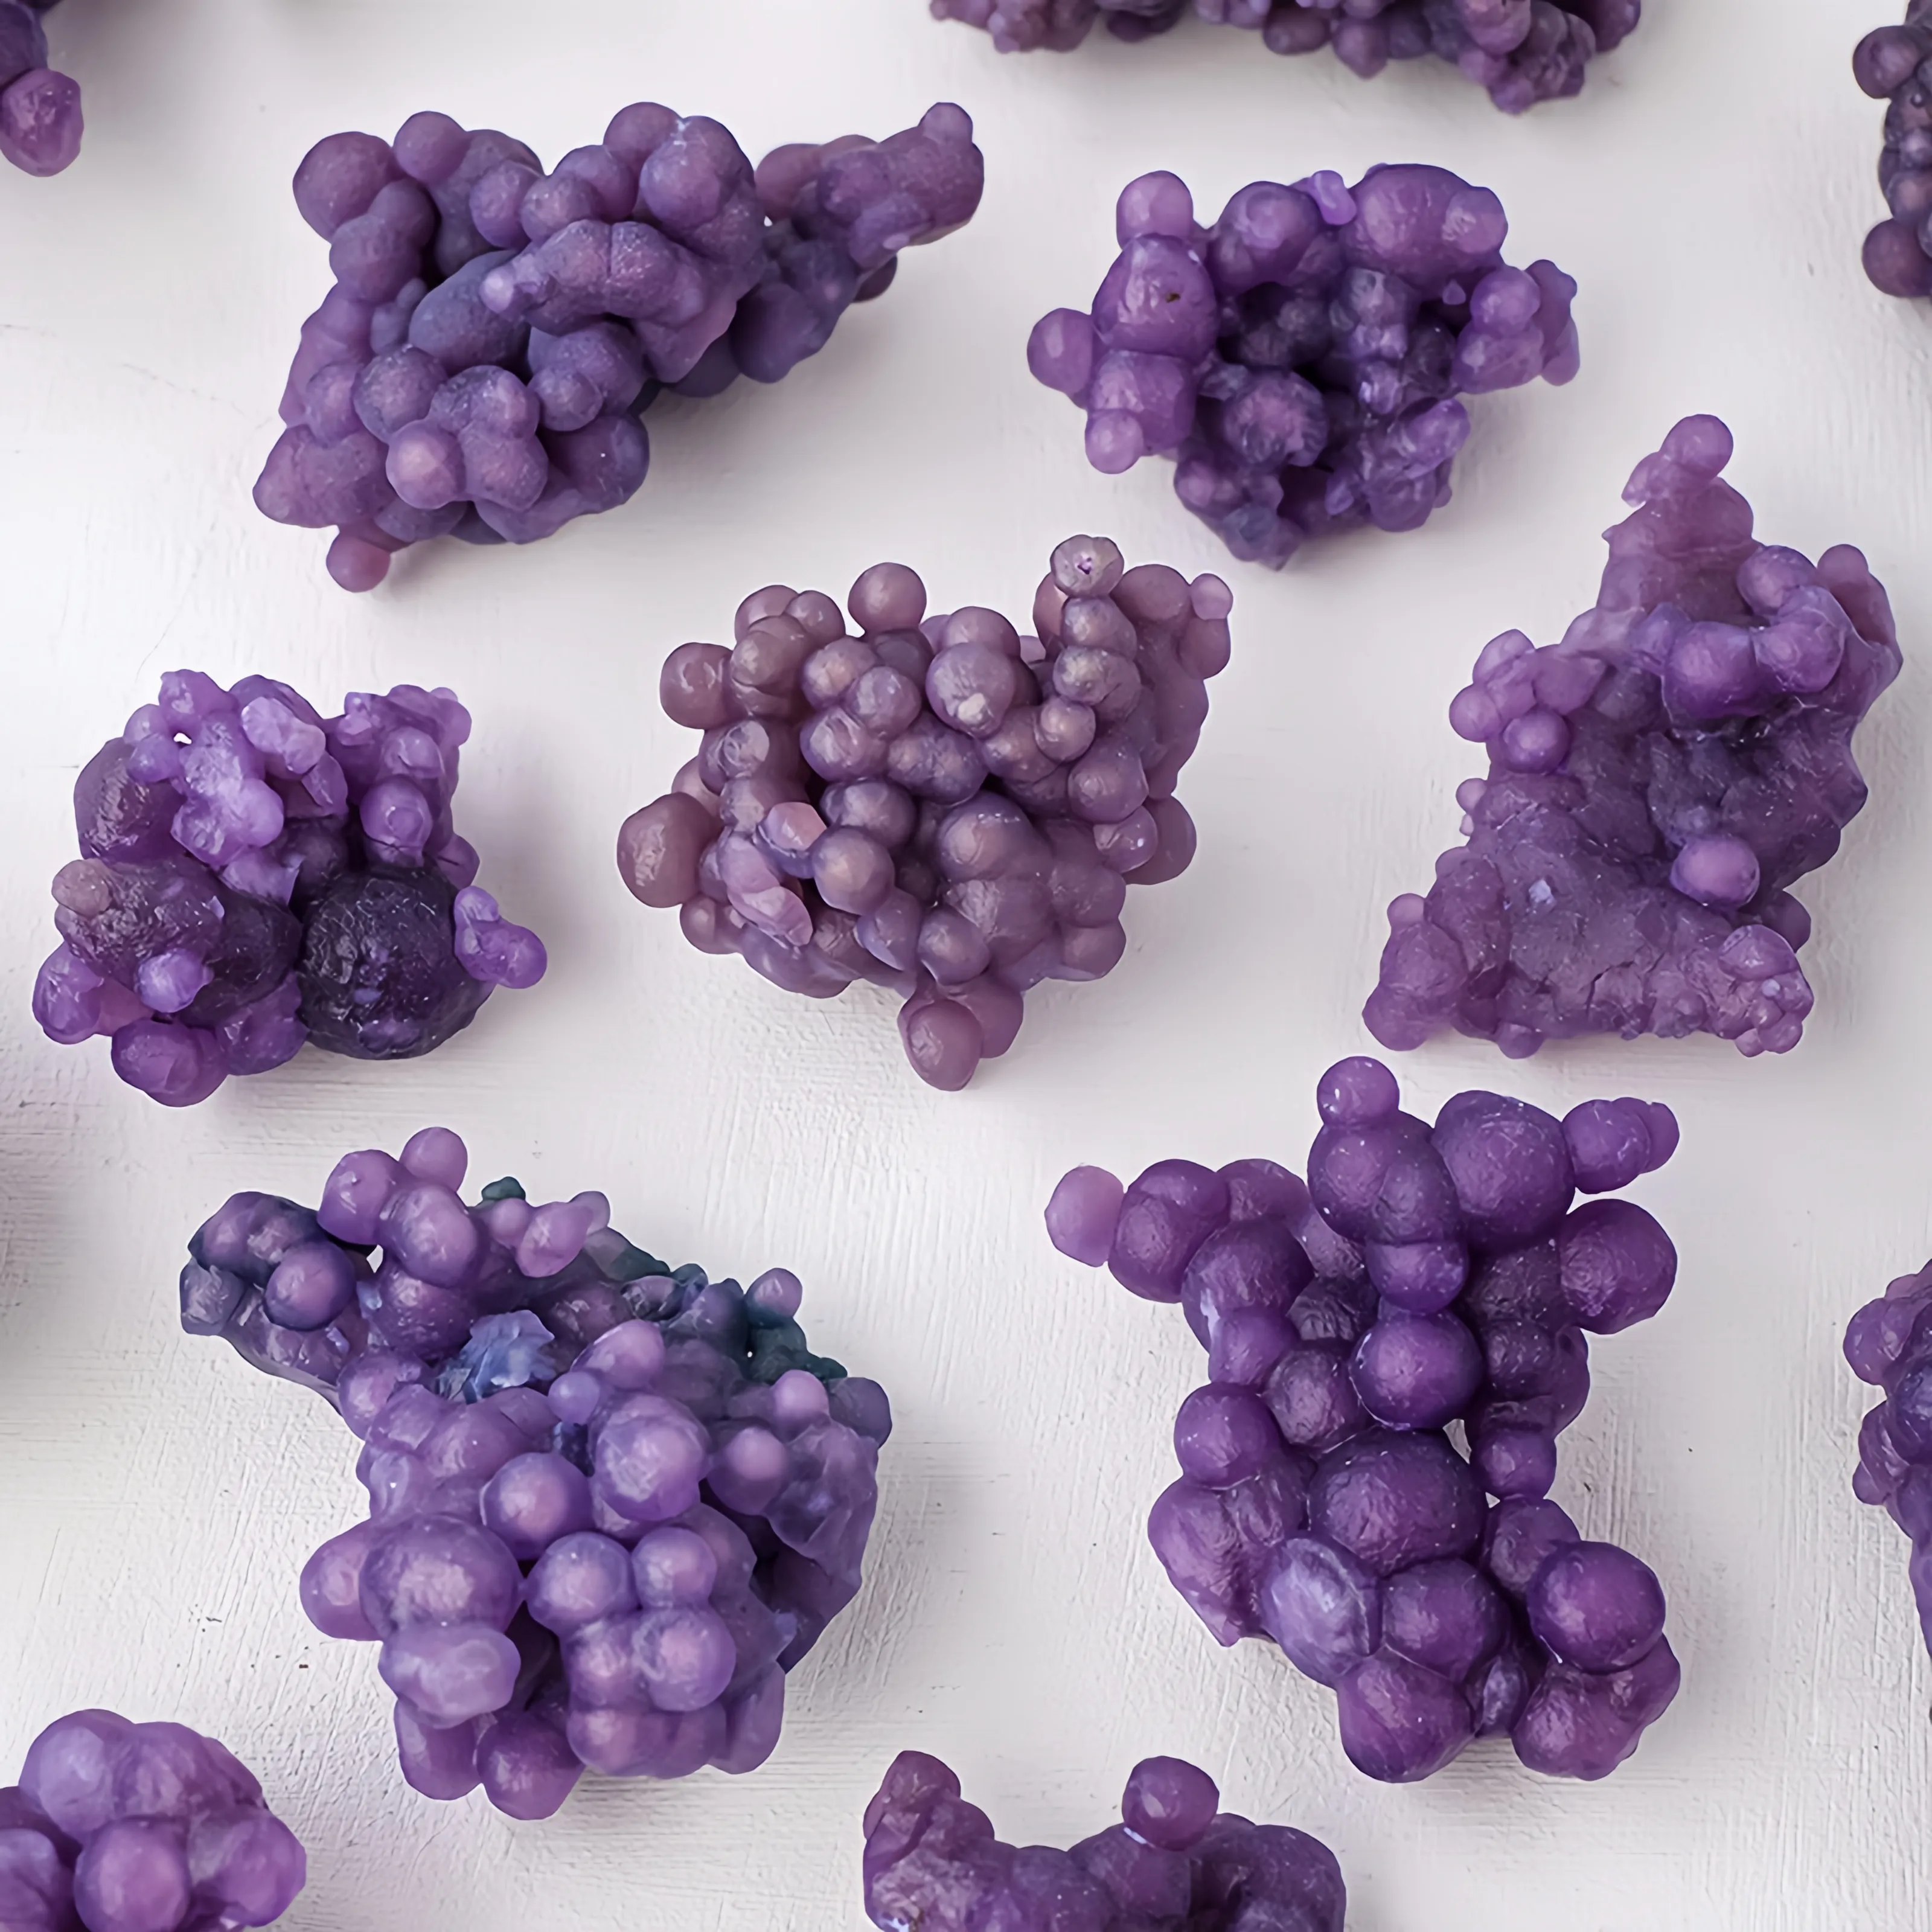 Venta al por mayor de cristal natural a granel uva ágata Mineral espécimen curación piedra púrpura cristal crudo para regalo